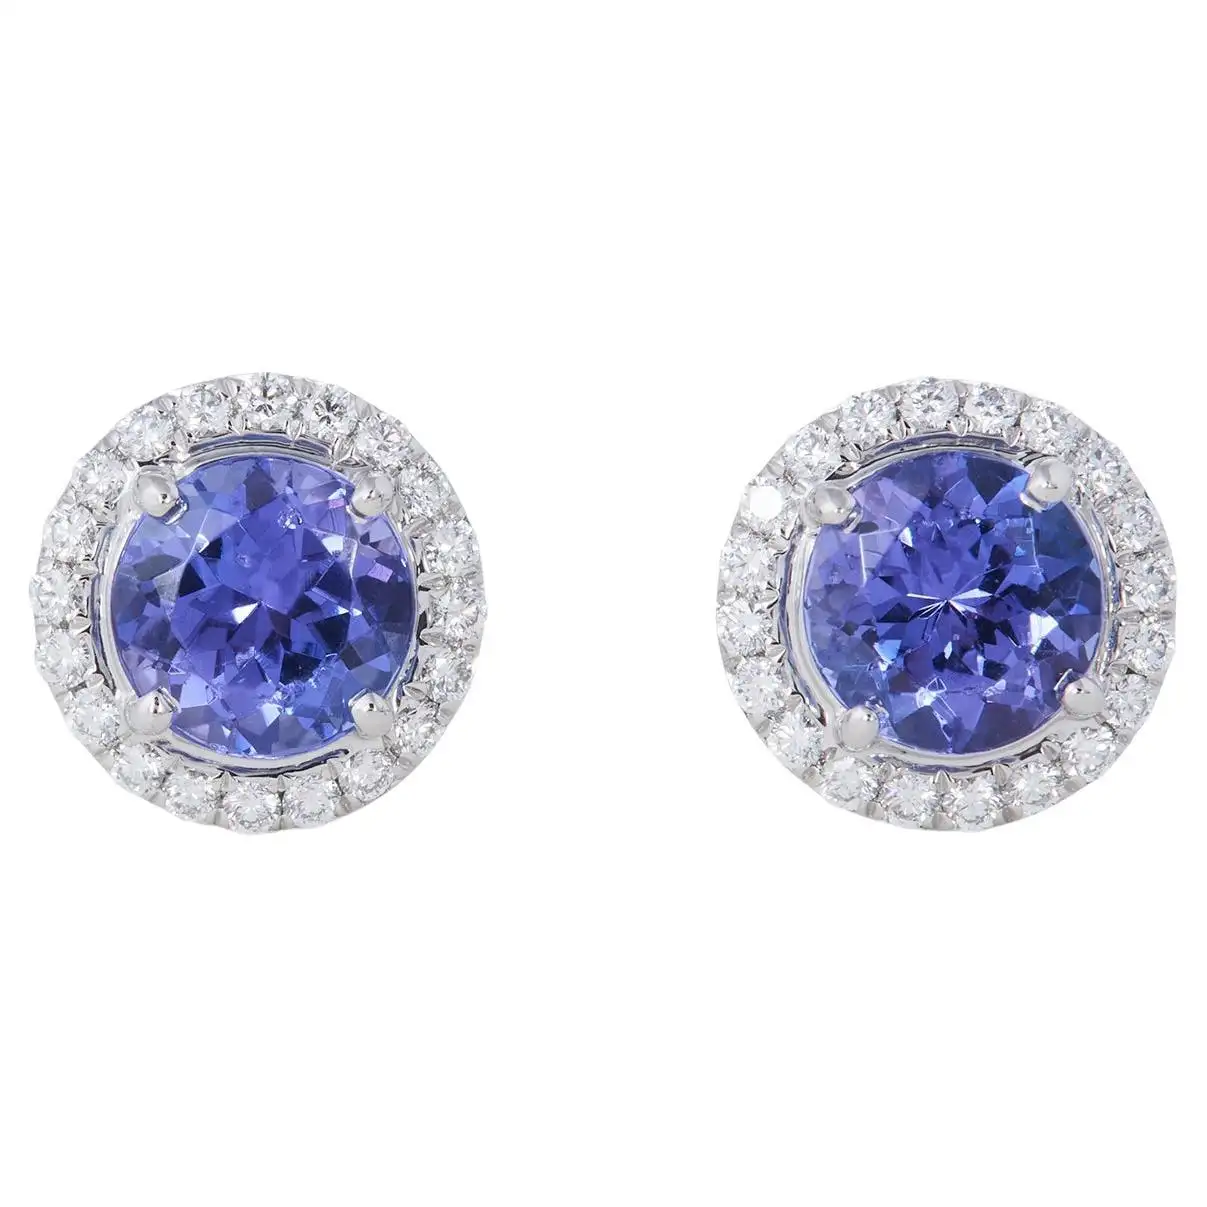 Soleste-Platinum-Diamond-and-Tanzanite-Earrings-Tiffany-Co-1.webp